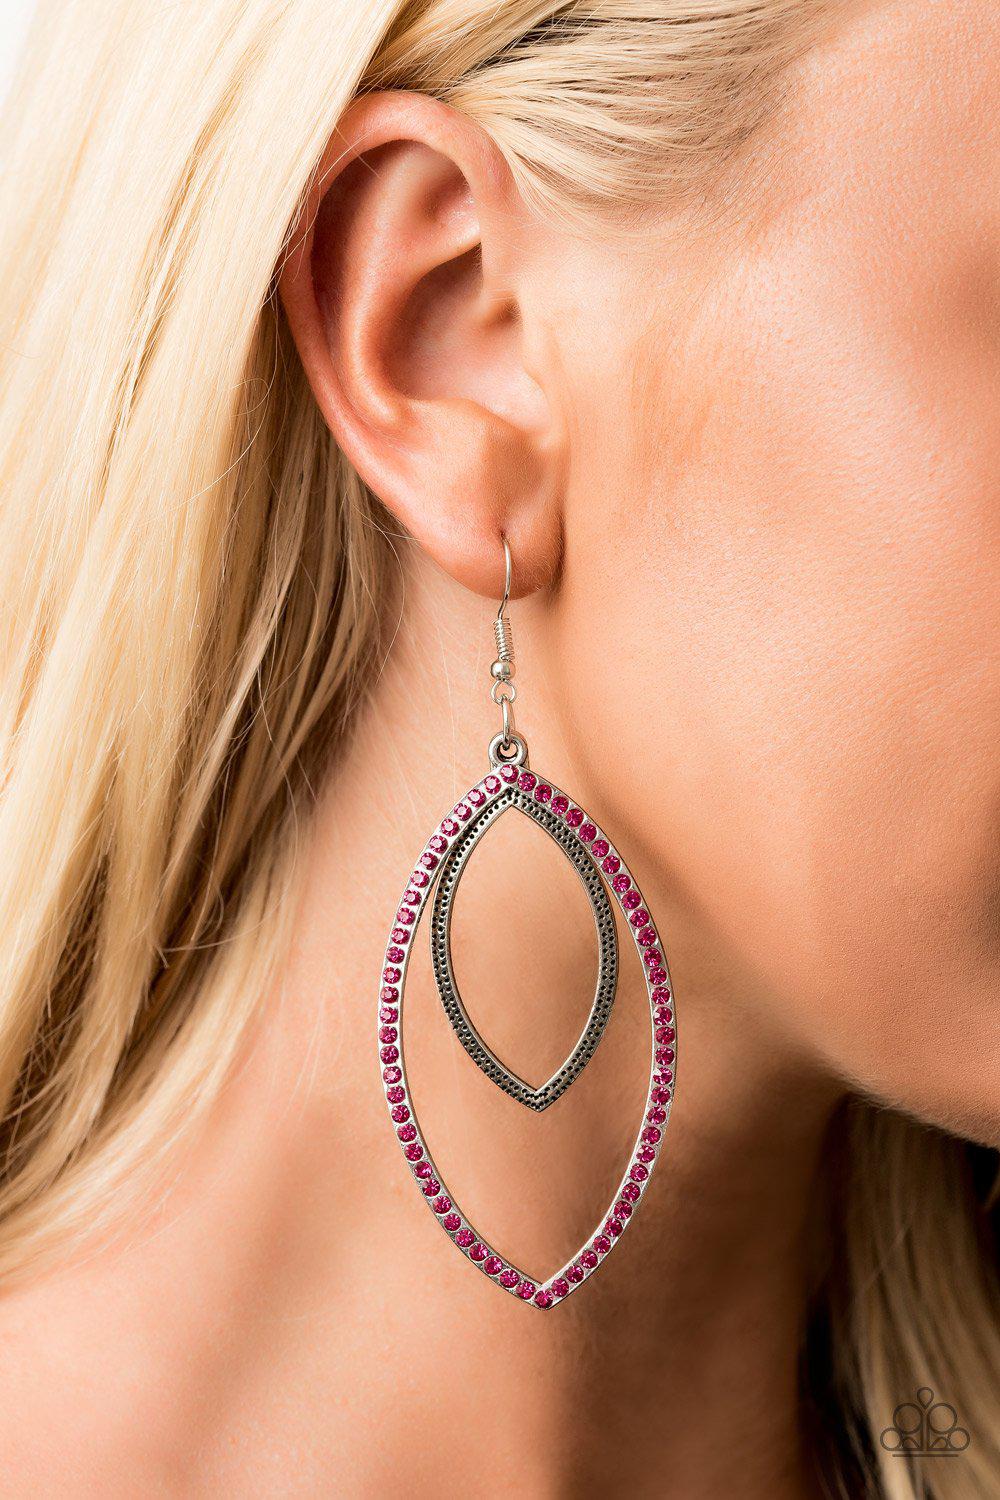 High Maintenance Pink Rhinestone Earrings - Paparazzi Accessories-CarasShop.com - $5 Jewelry by Cara Jewels